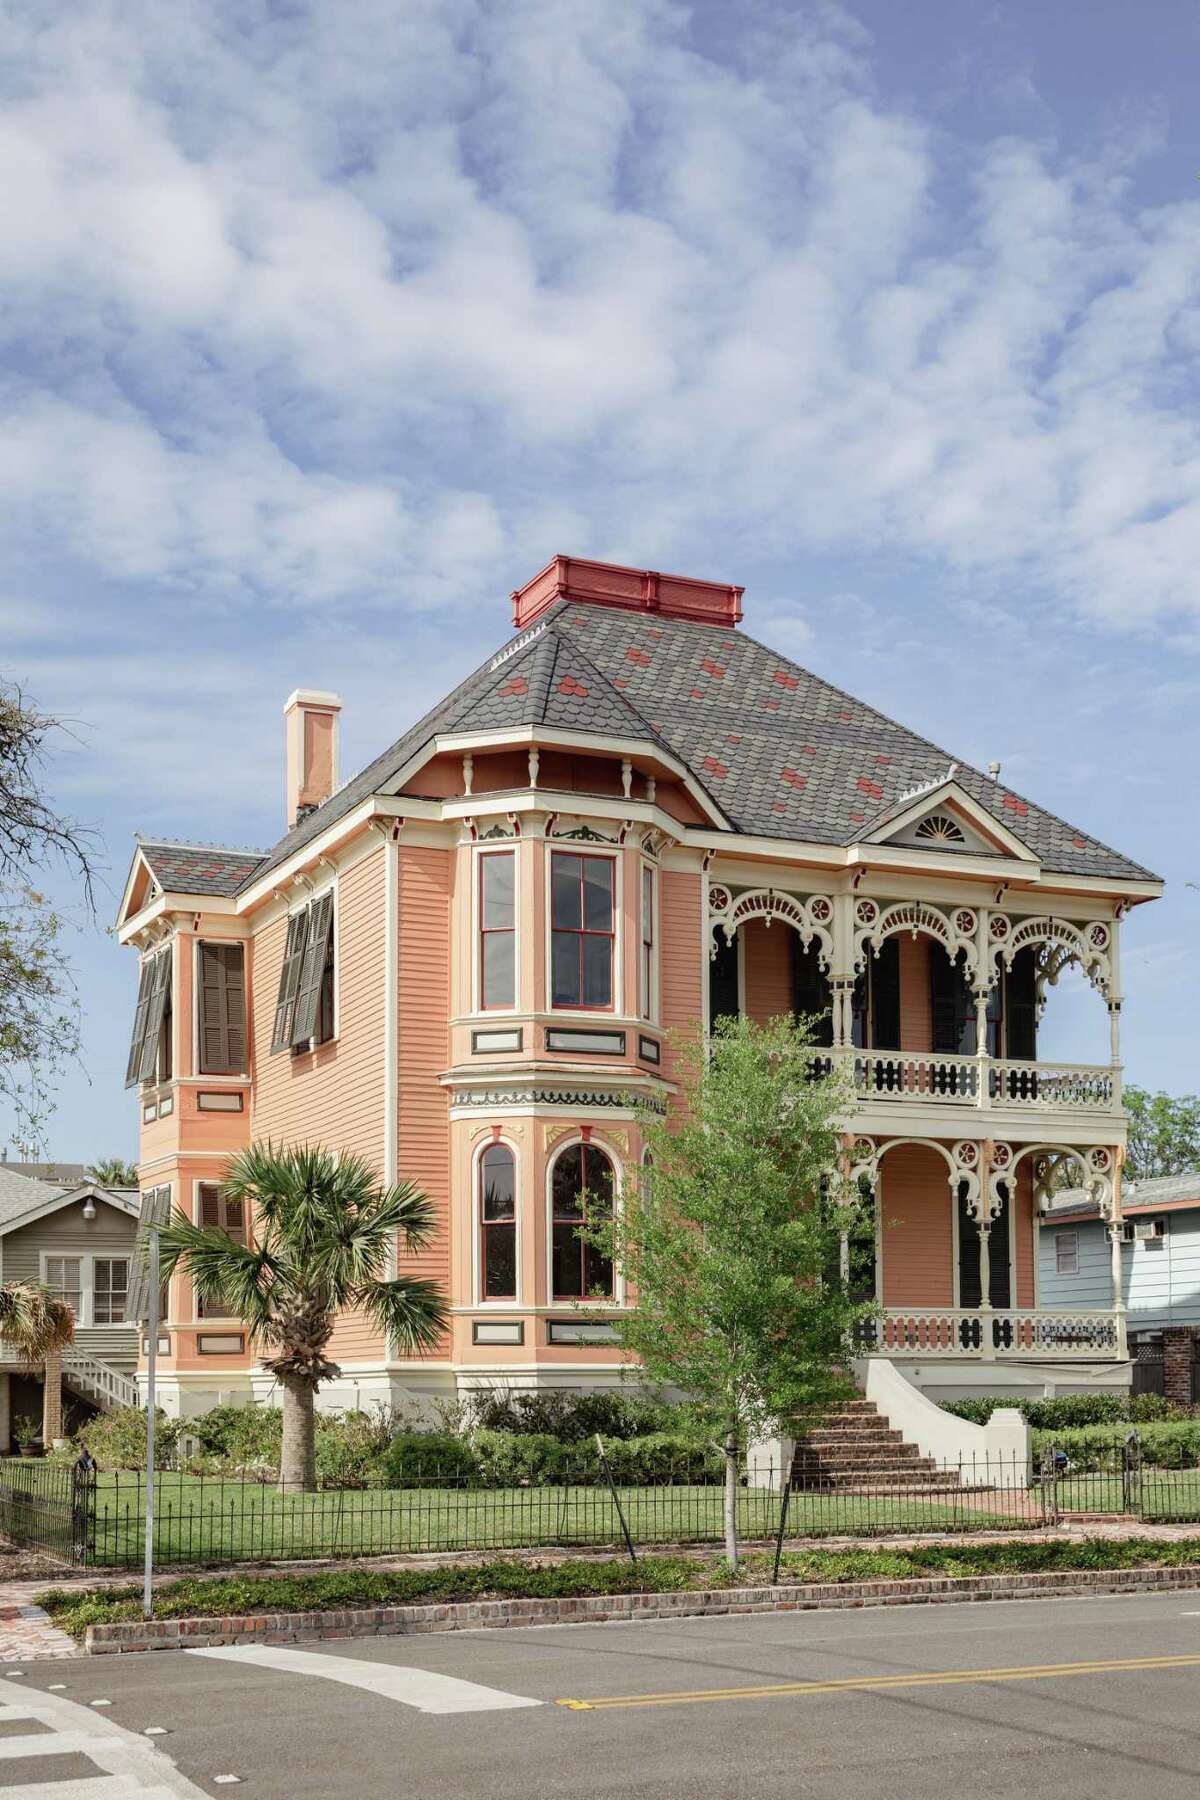 Galveston home tour shows off restored City National Bank Building